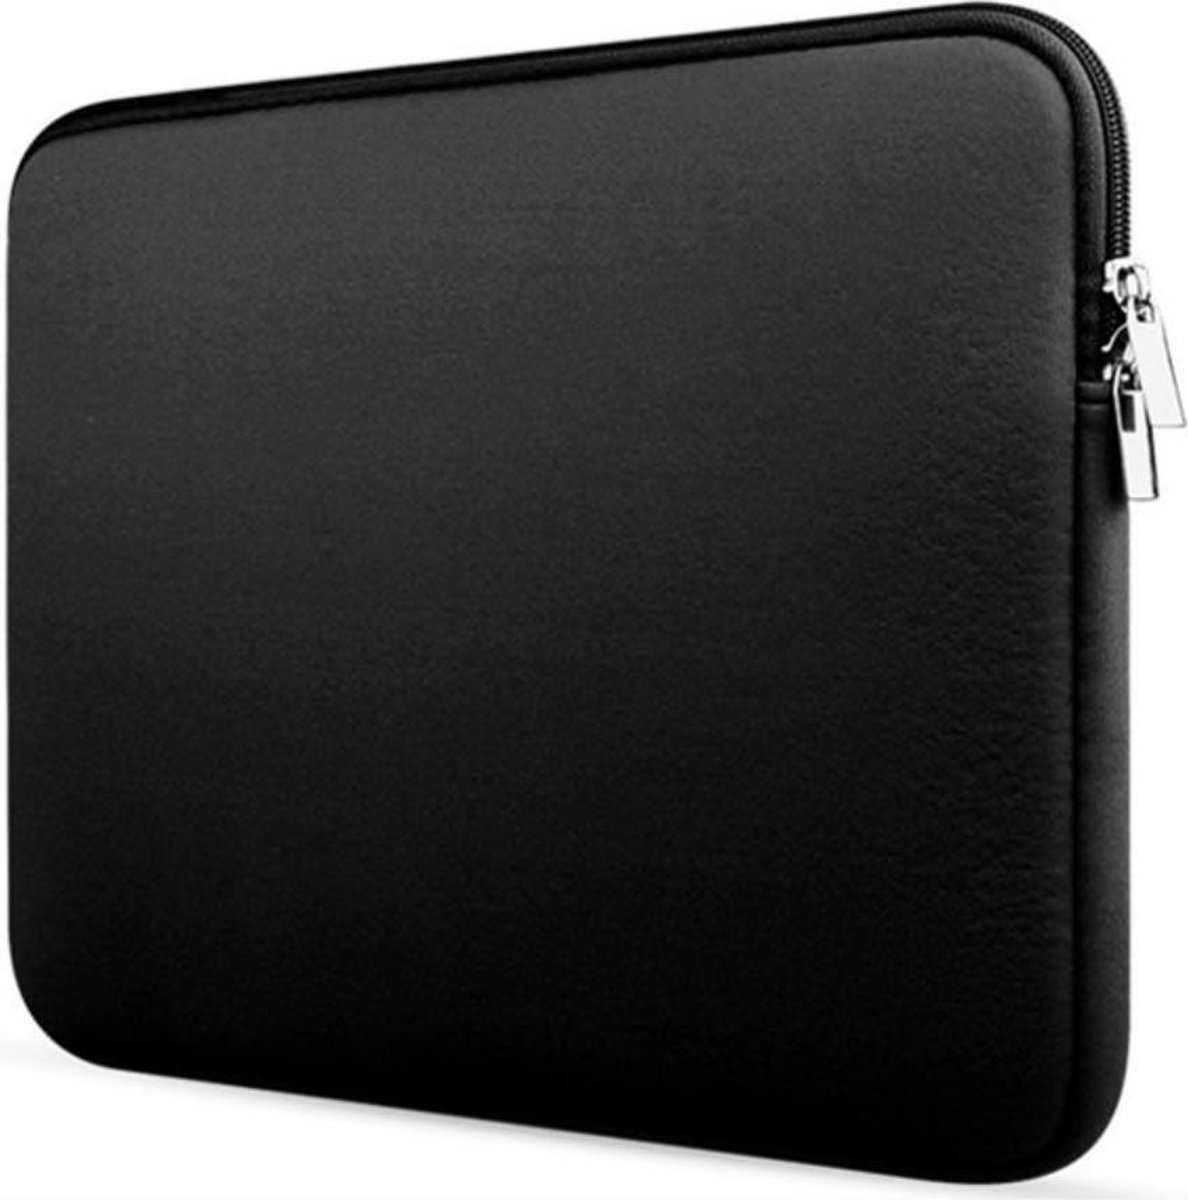 Clark Gear - laptop hoes - Zwart - Voor 13 Inch Laptops - Laptop sleeve - Soft Case